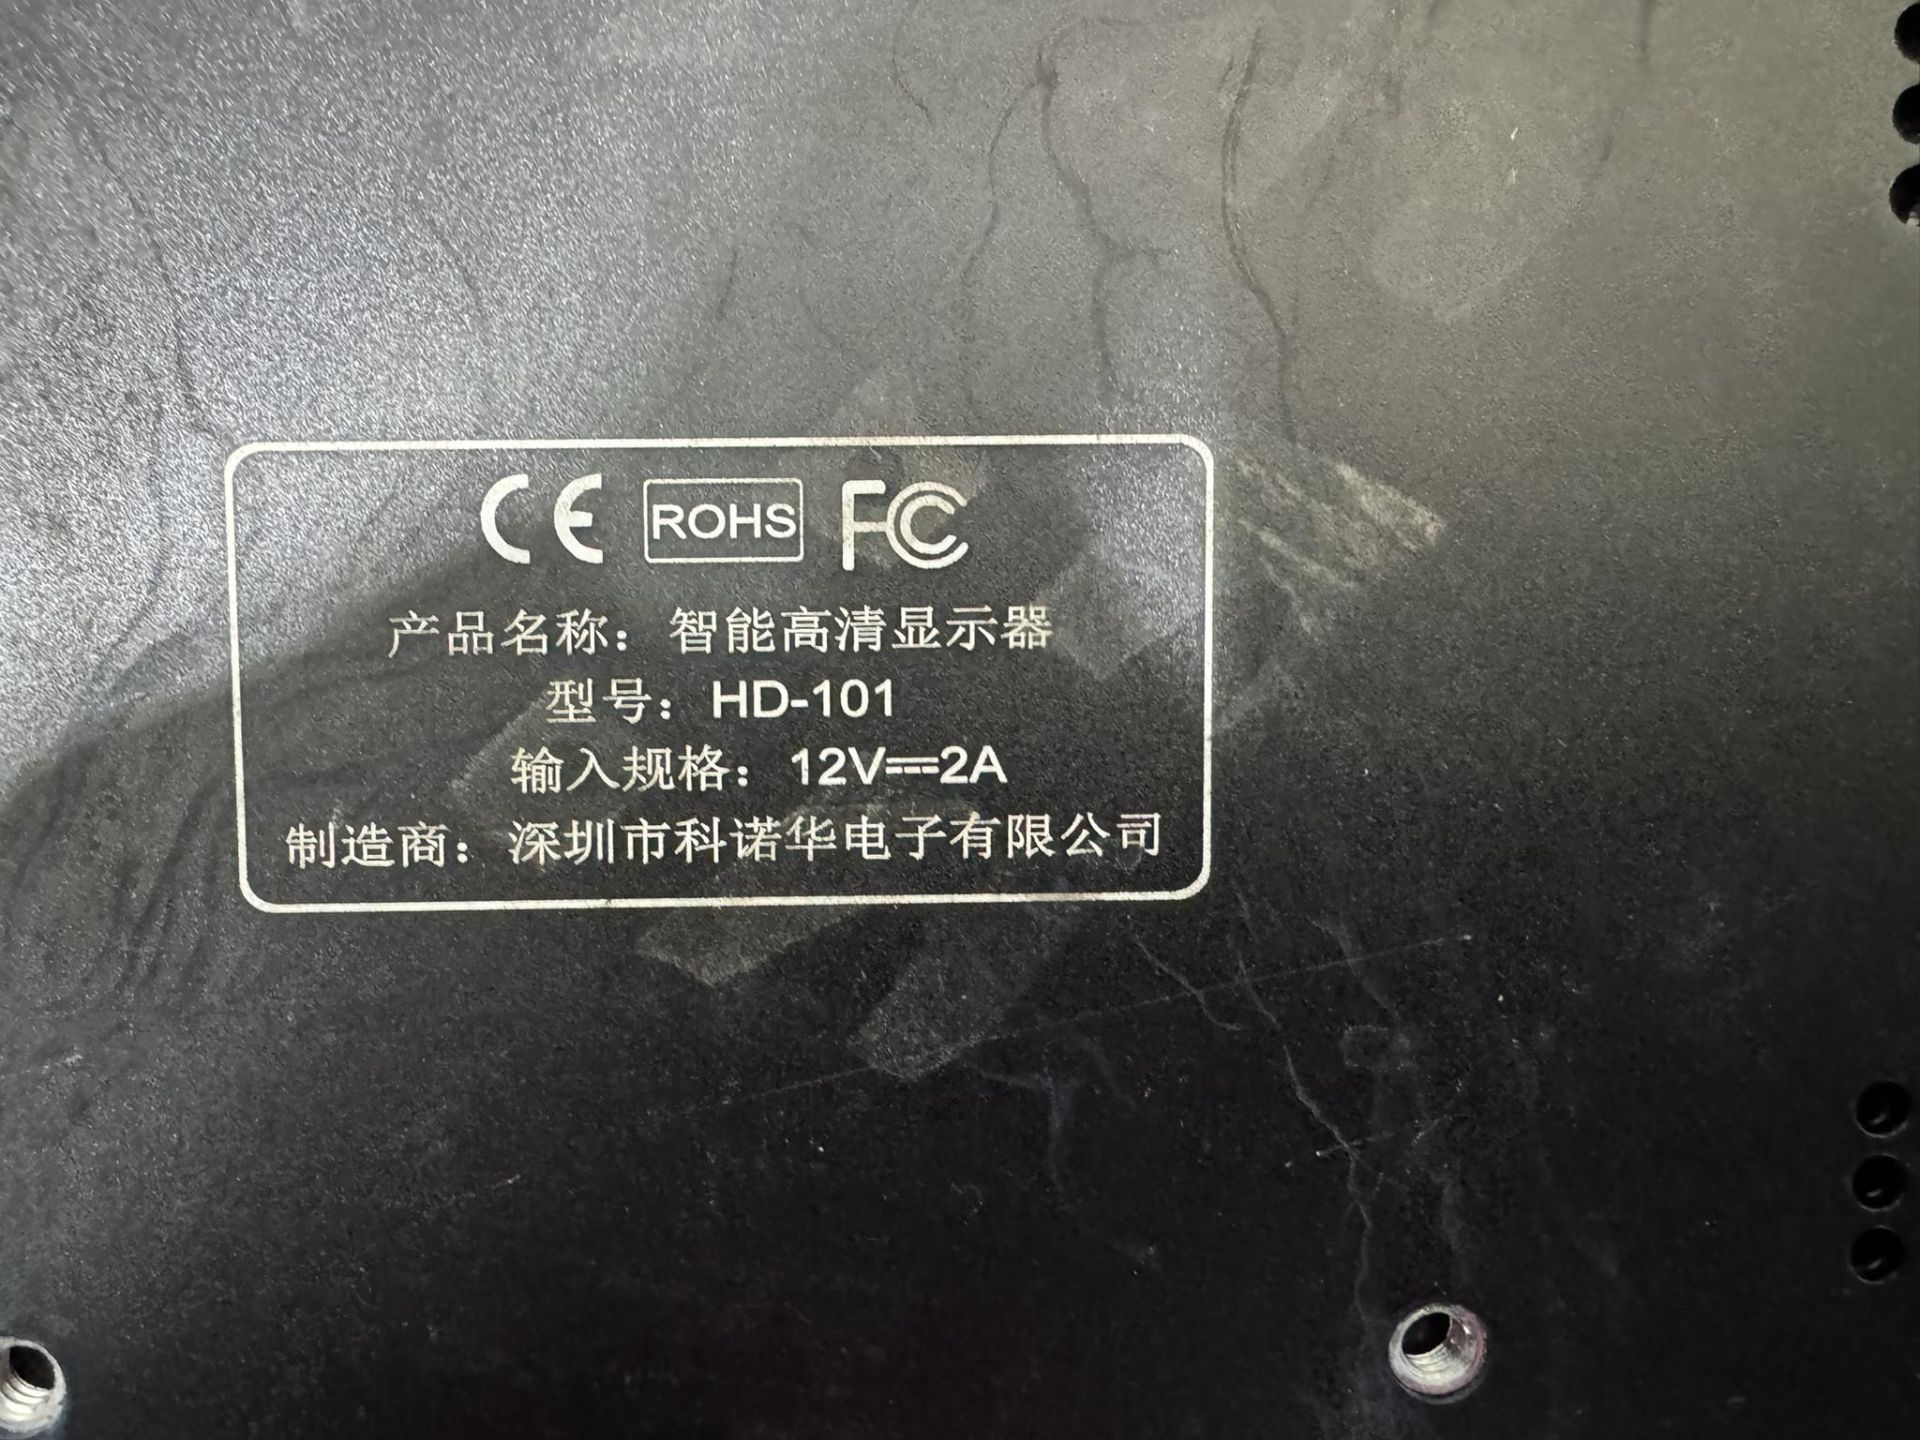 Prechen HD-101 10.1'' LCD Display Monitor - Image 3 of 3